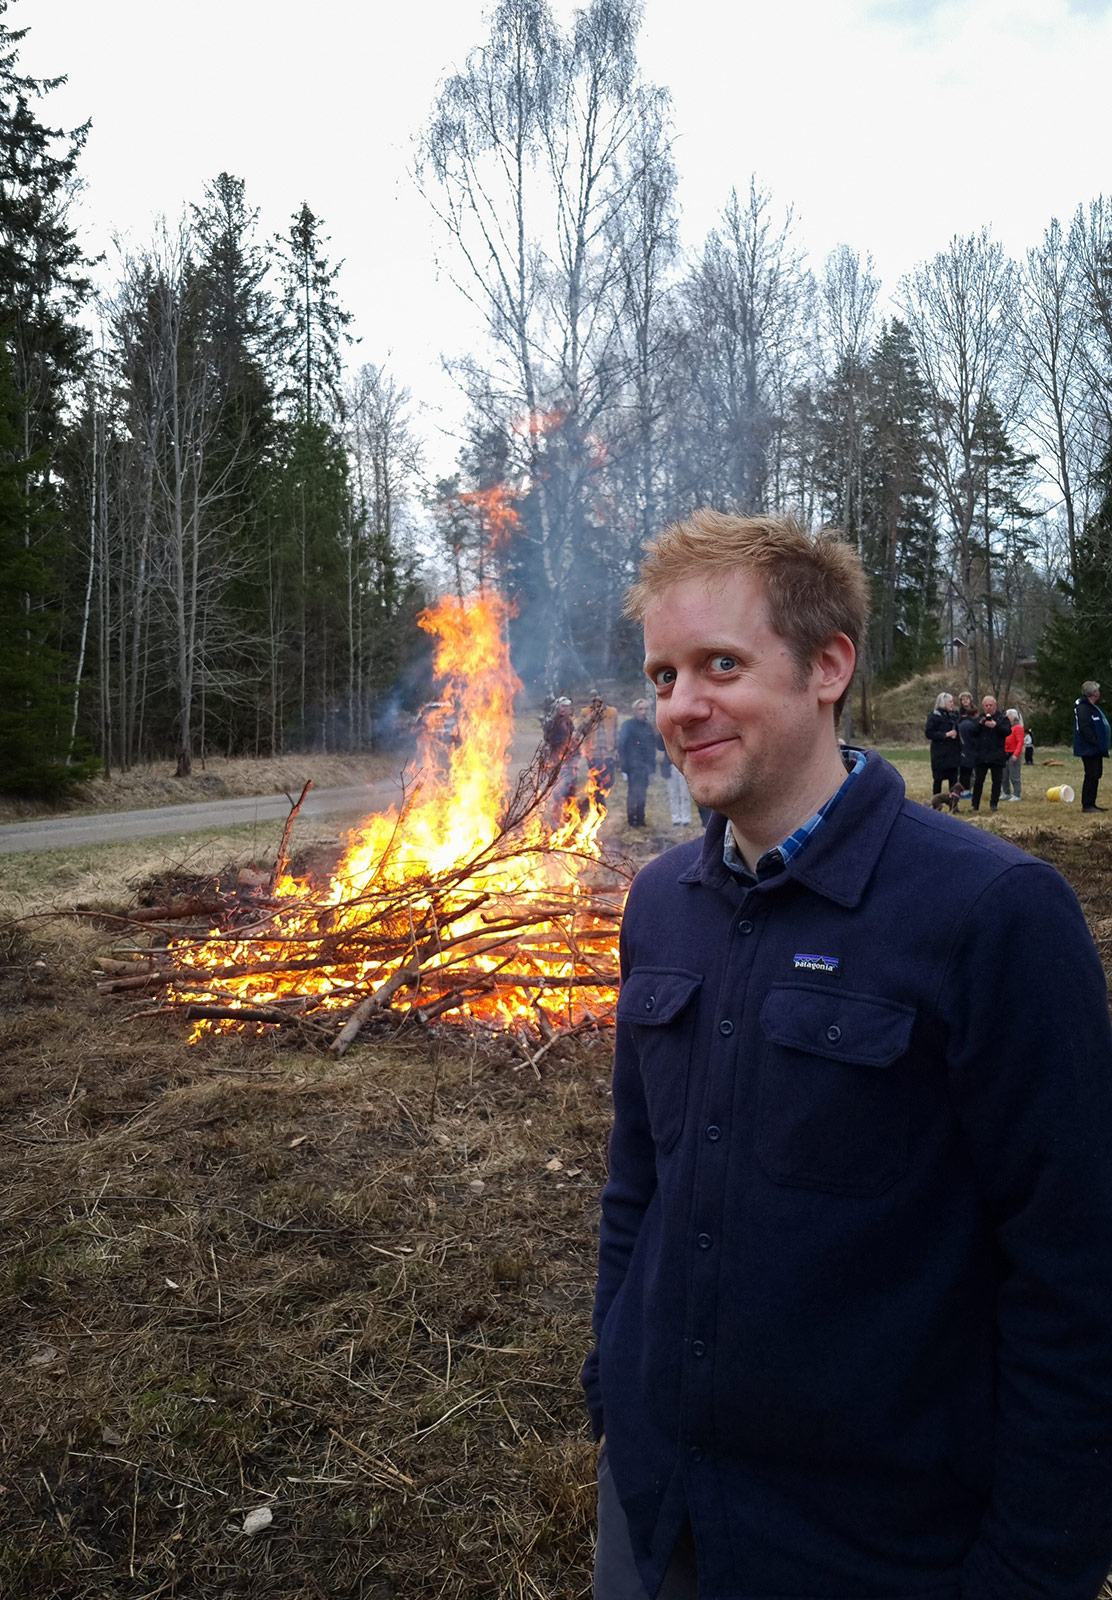 Man stood in front of bonfire